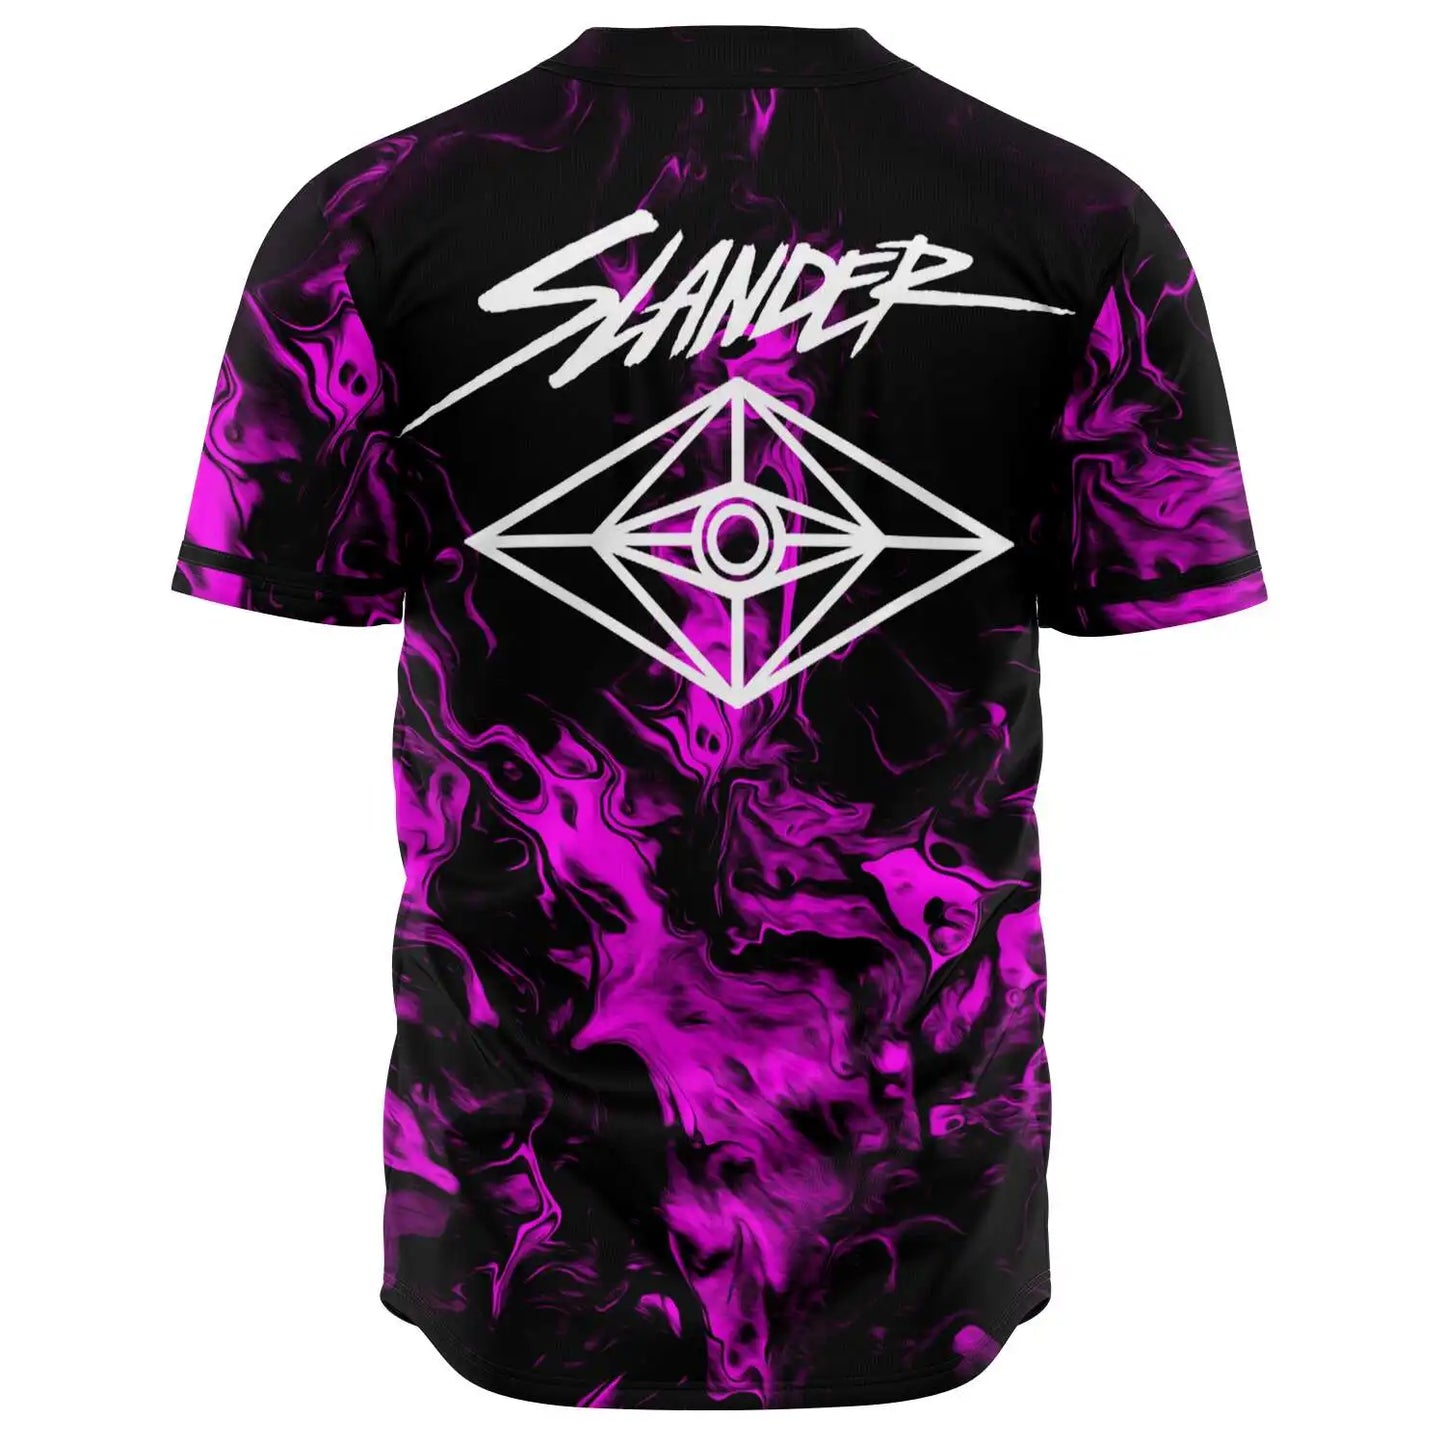 Slander Purple Rave Jersey